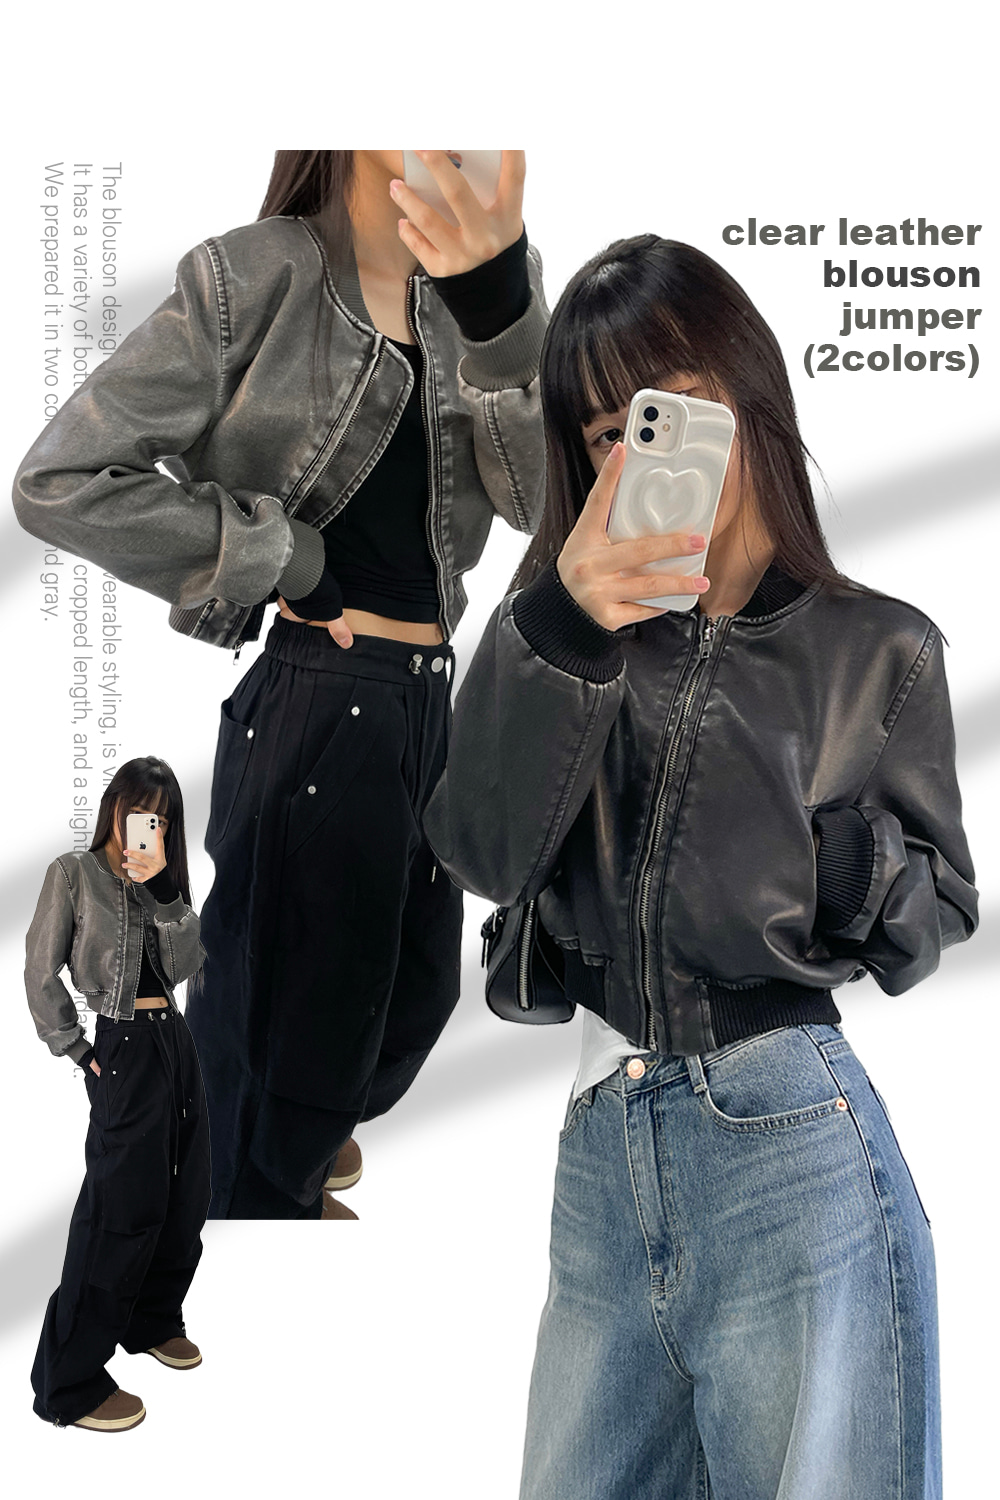 clear leather blouson jumper (2colors)